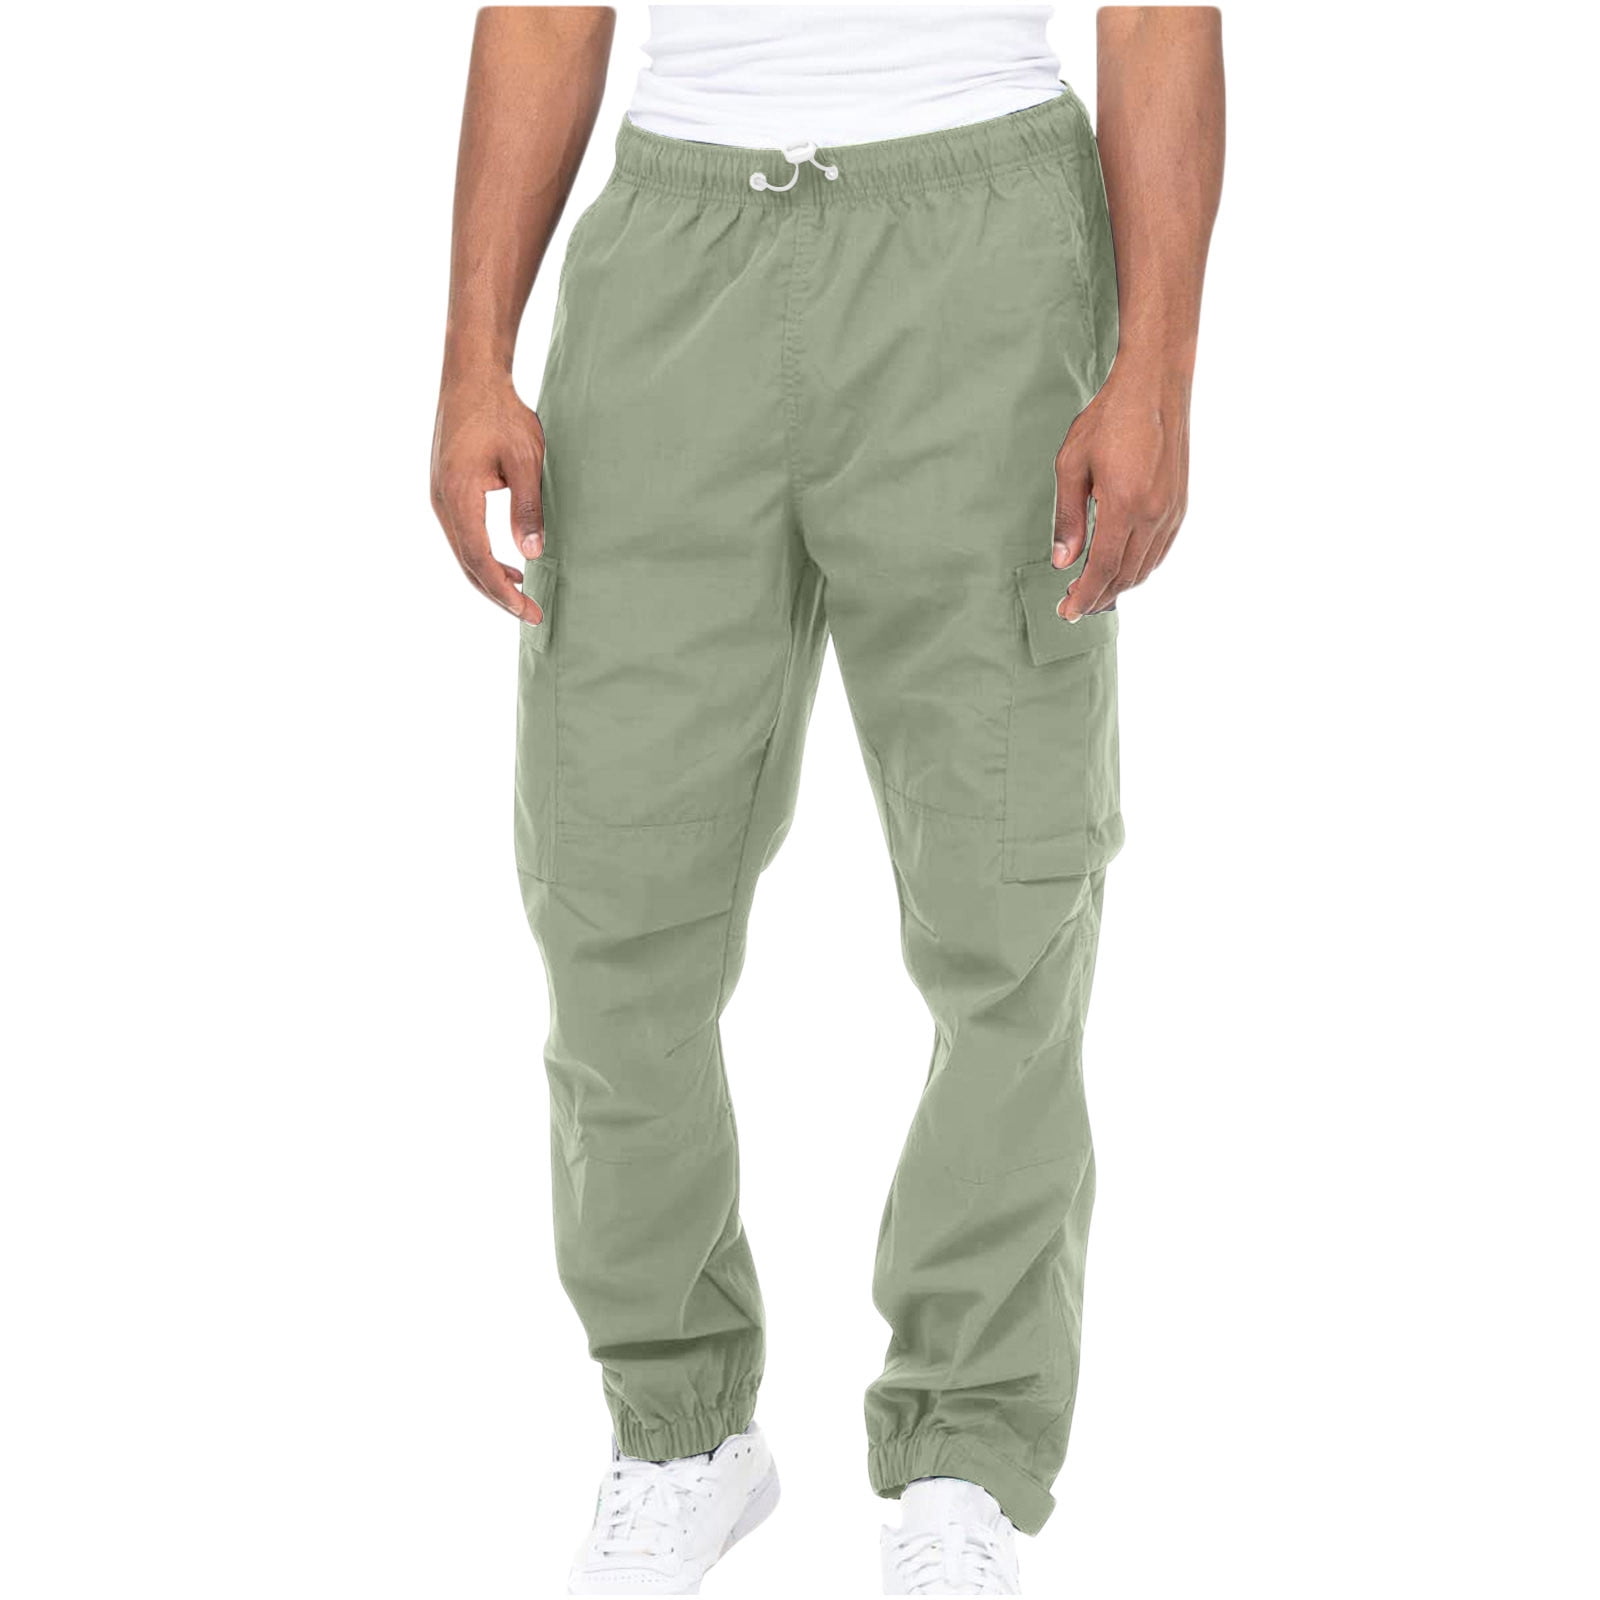 Men's Trousers Cargo Jogger Cotton Casual Sweatpants Outdoor Elastic ...